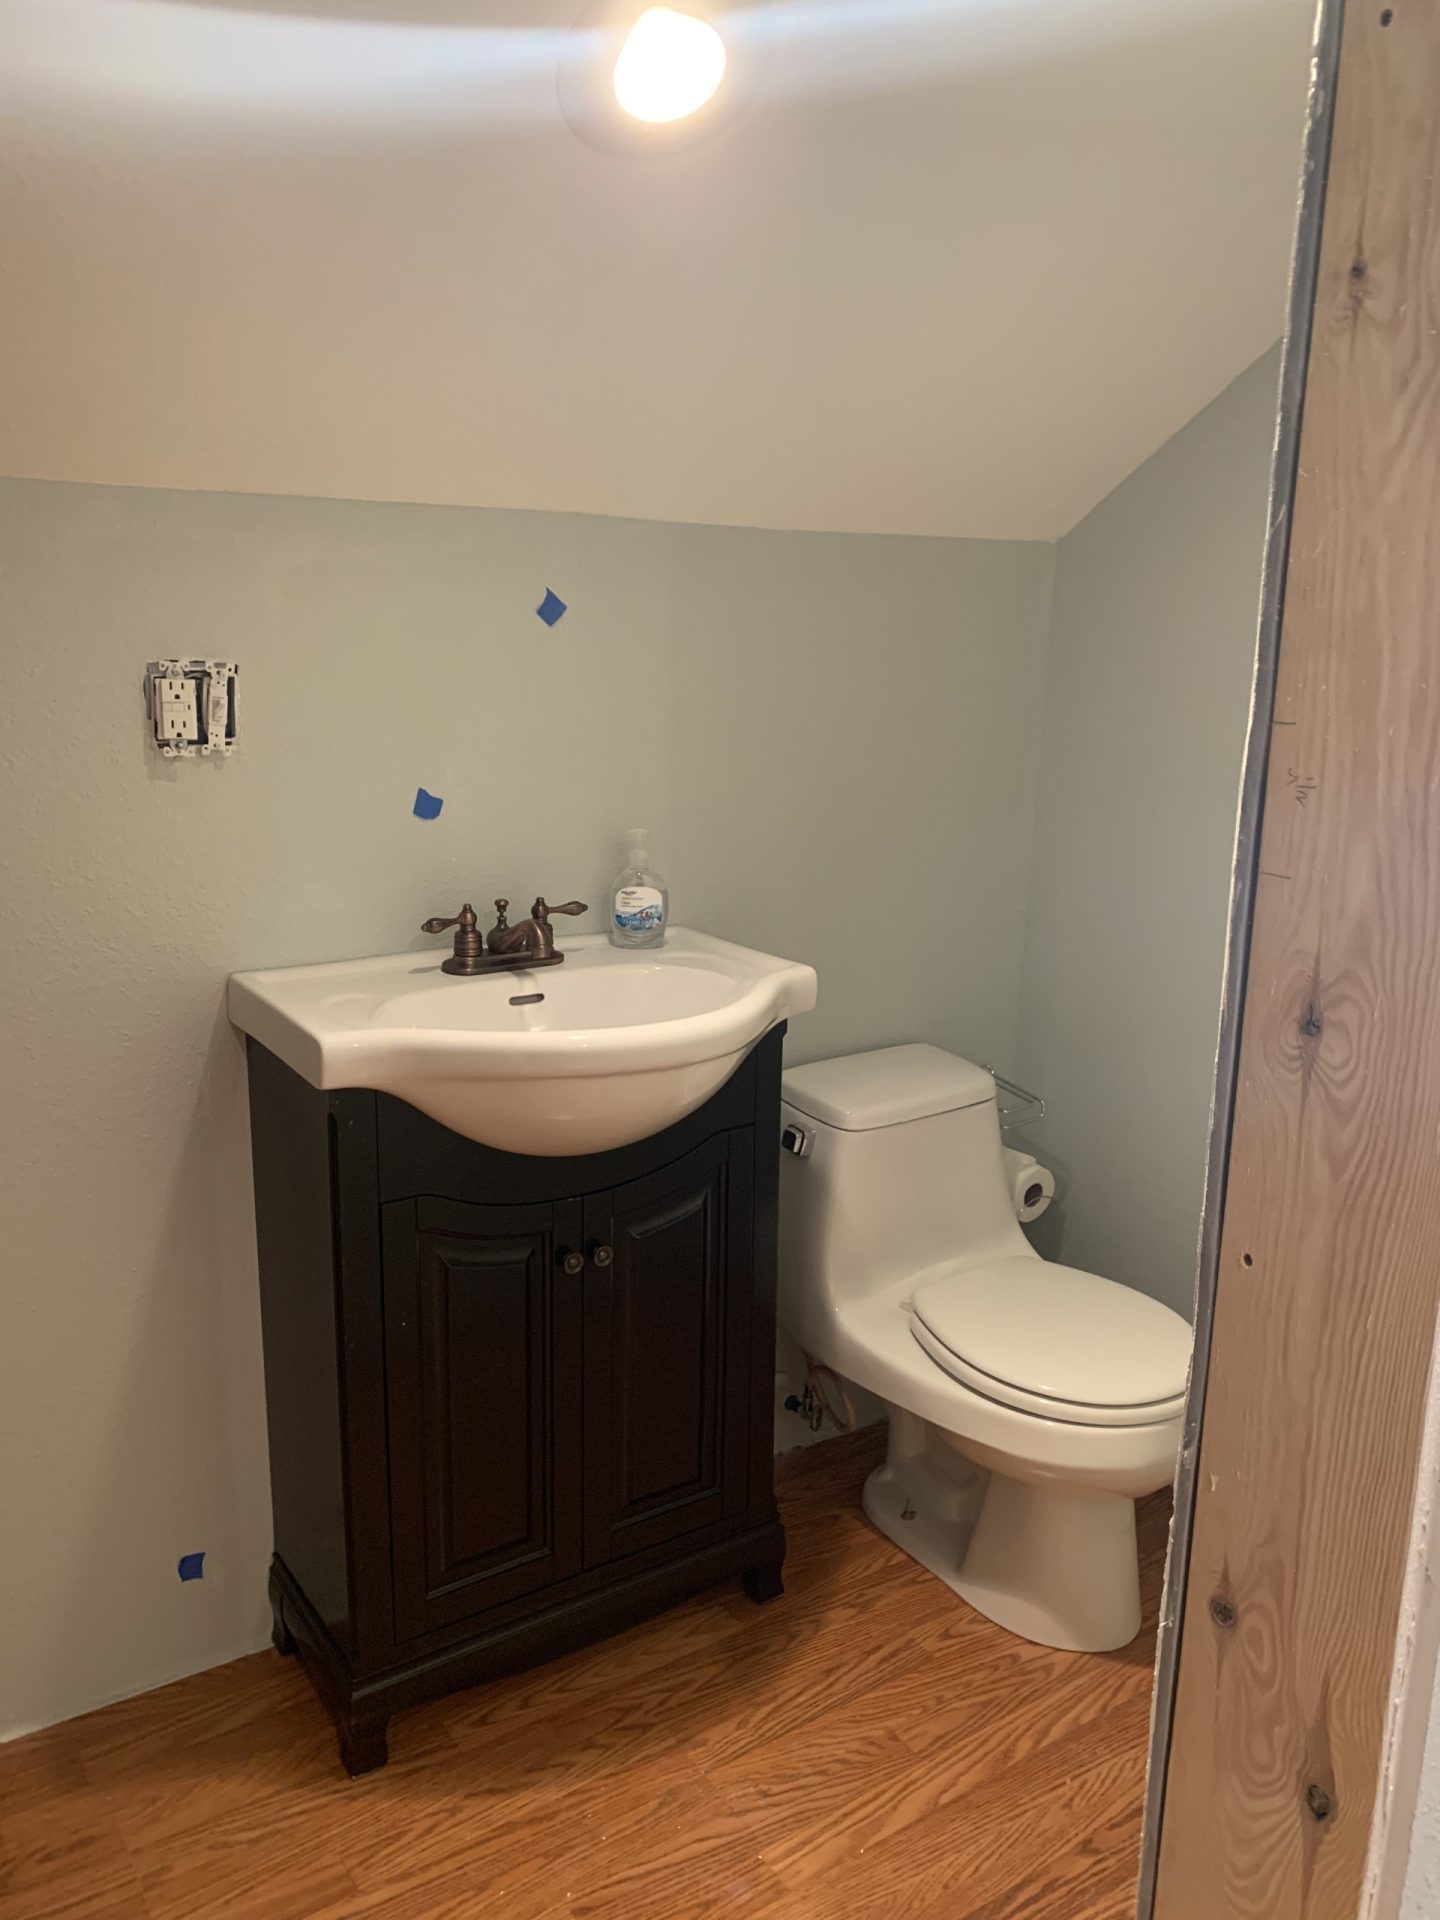 Upstairs bathroom toilet and vanity from downstairs bathroom installed